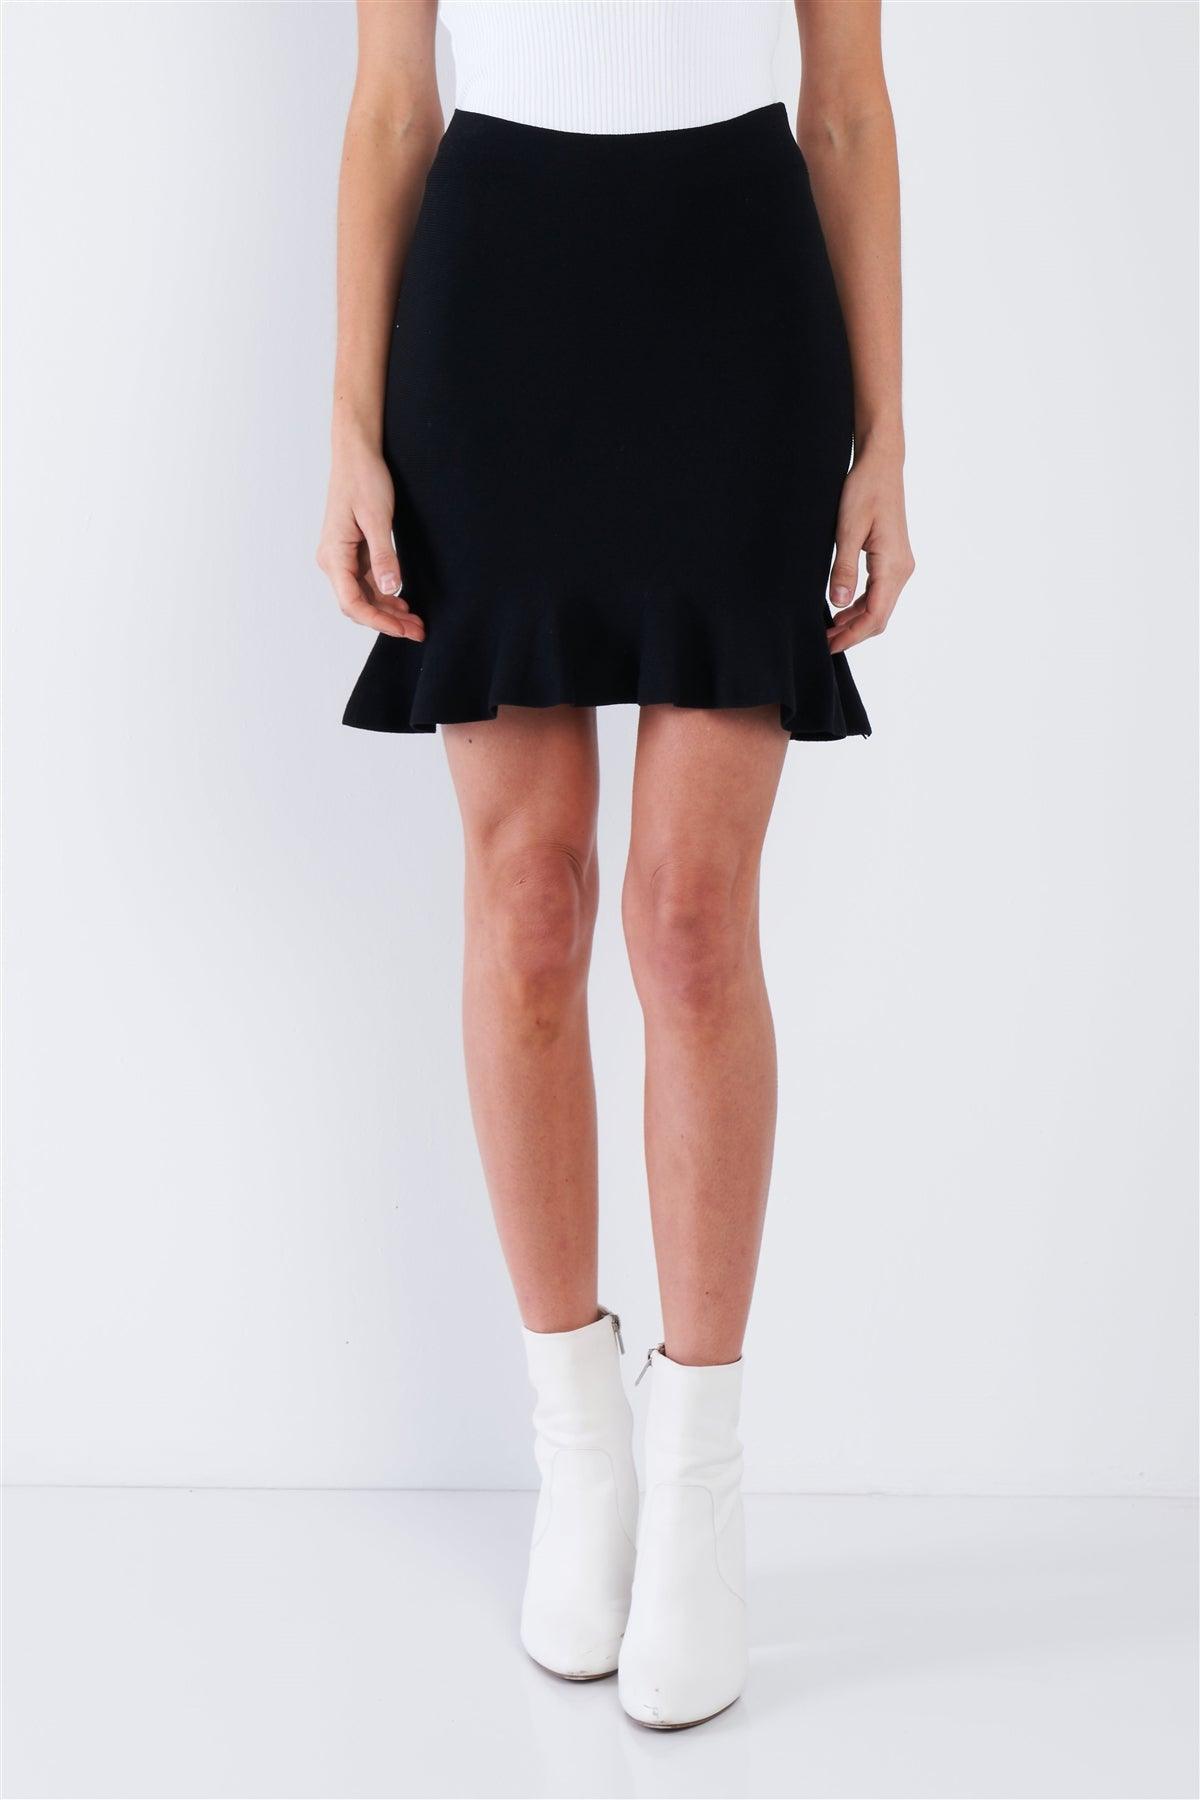 Black Sleek Mermaid Frill Hem Mini Skirt /2-2-2